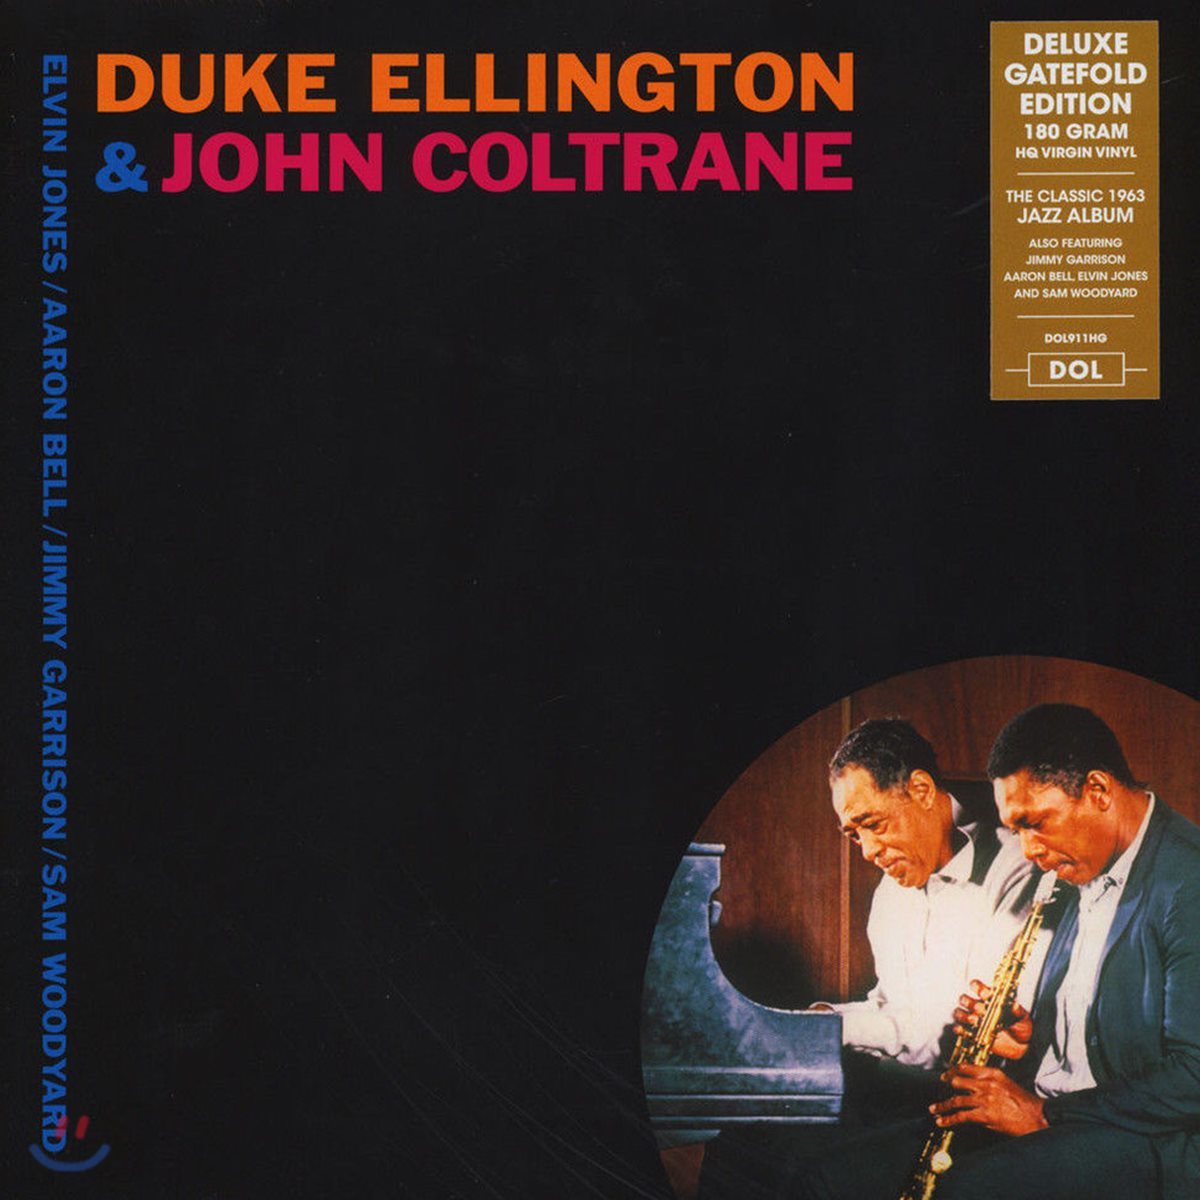 Duke Ellington / John Coltrane (듀크 엘링턴, 존 콜트레인) - Duke Ellington / John Coltrane [LP]